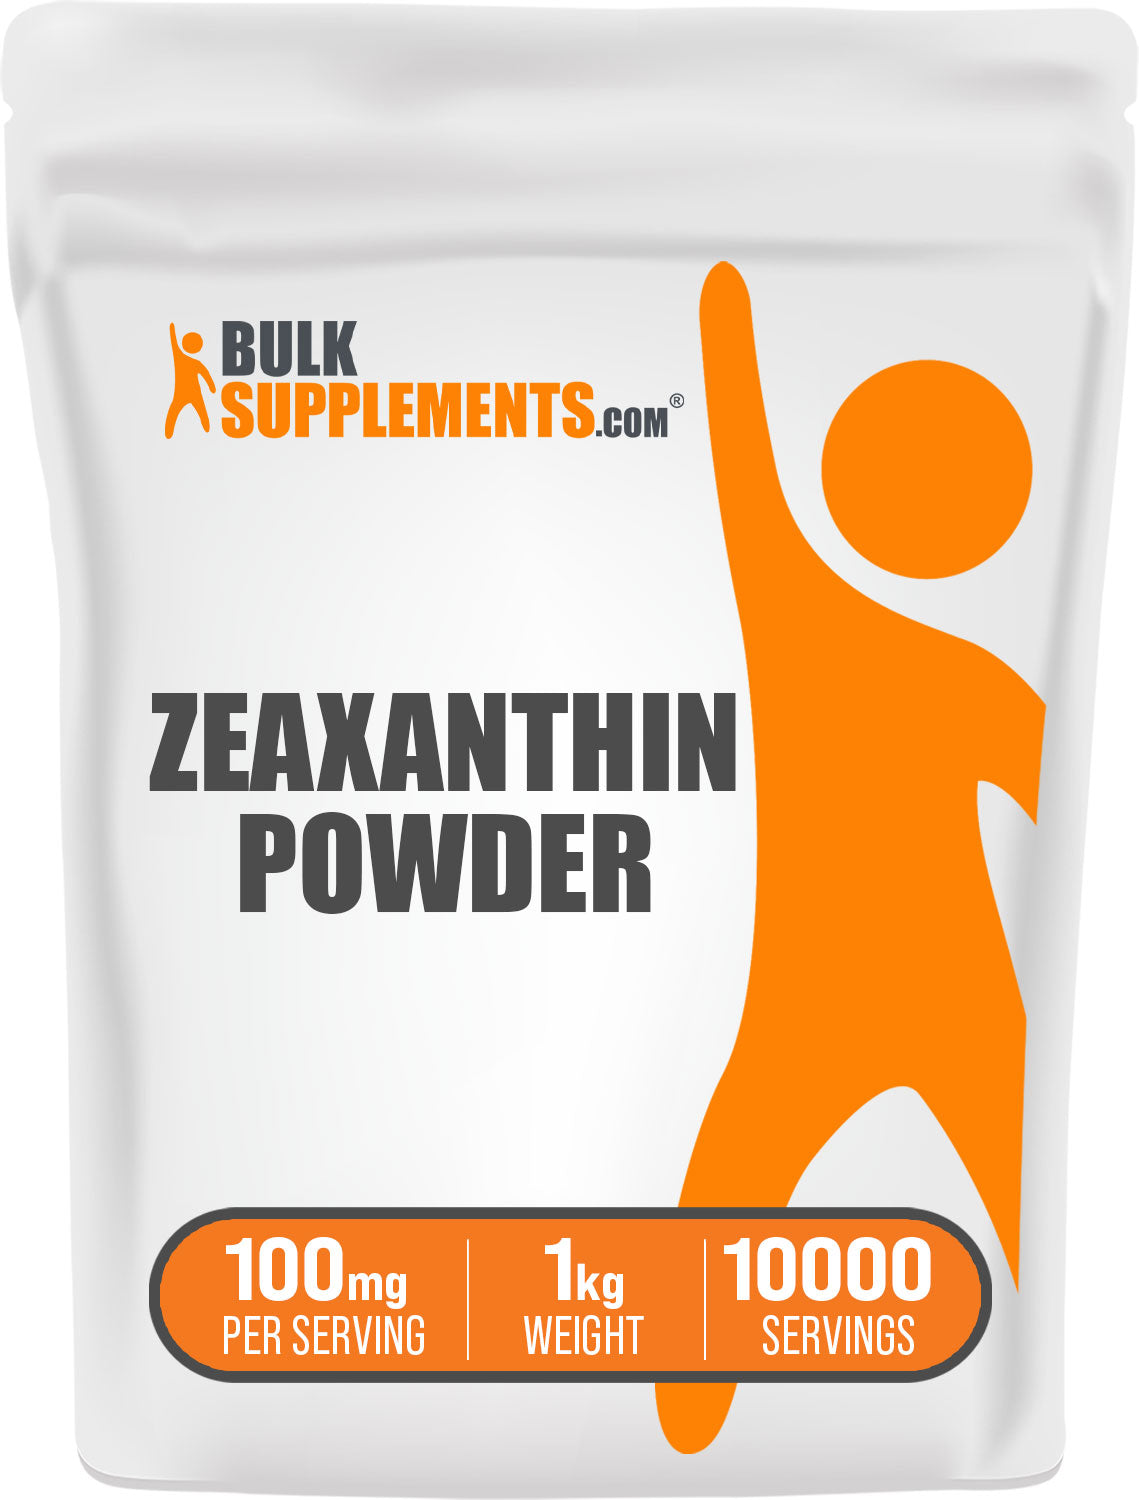 BulkSupplements Zeaxanthin Powder 1kg bag